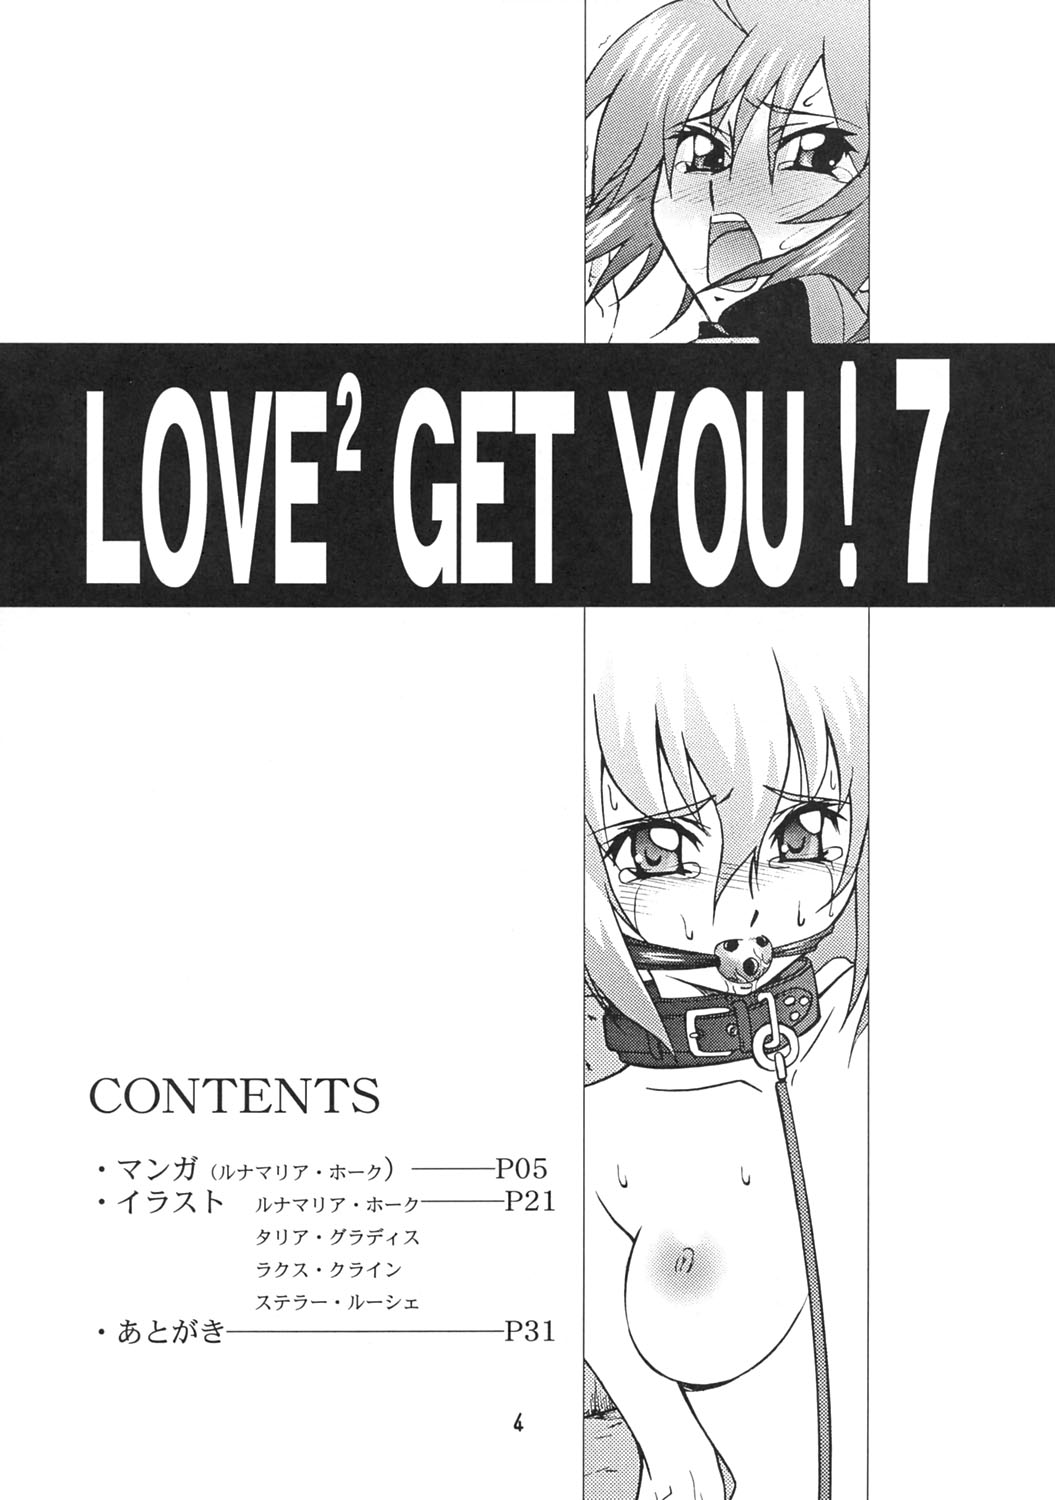 (C67) [GET YOU! (長谷川敦史)] LOVE LOVE GET YOU! 7 (機動戦士ガンダムSEED DESTINY)